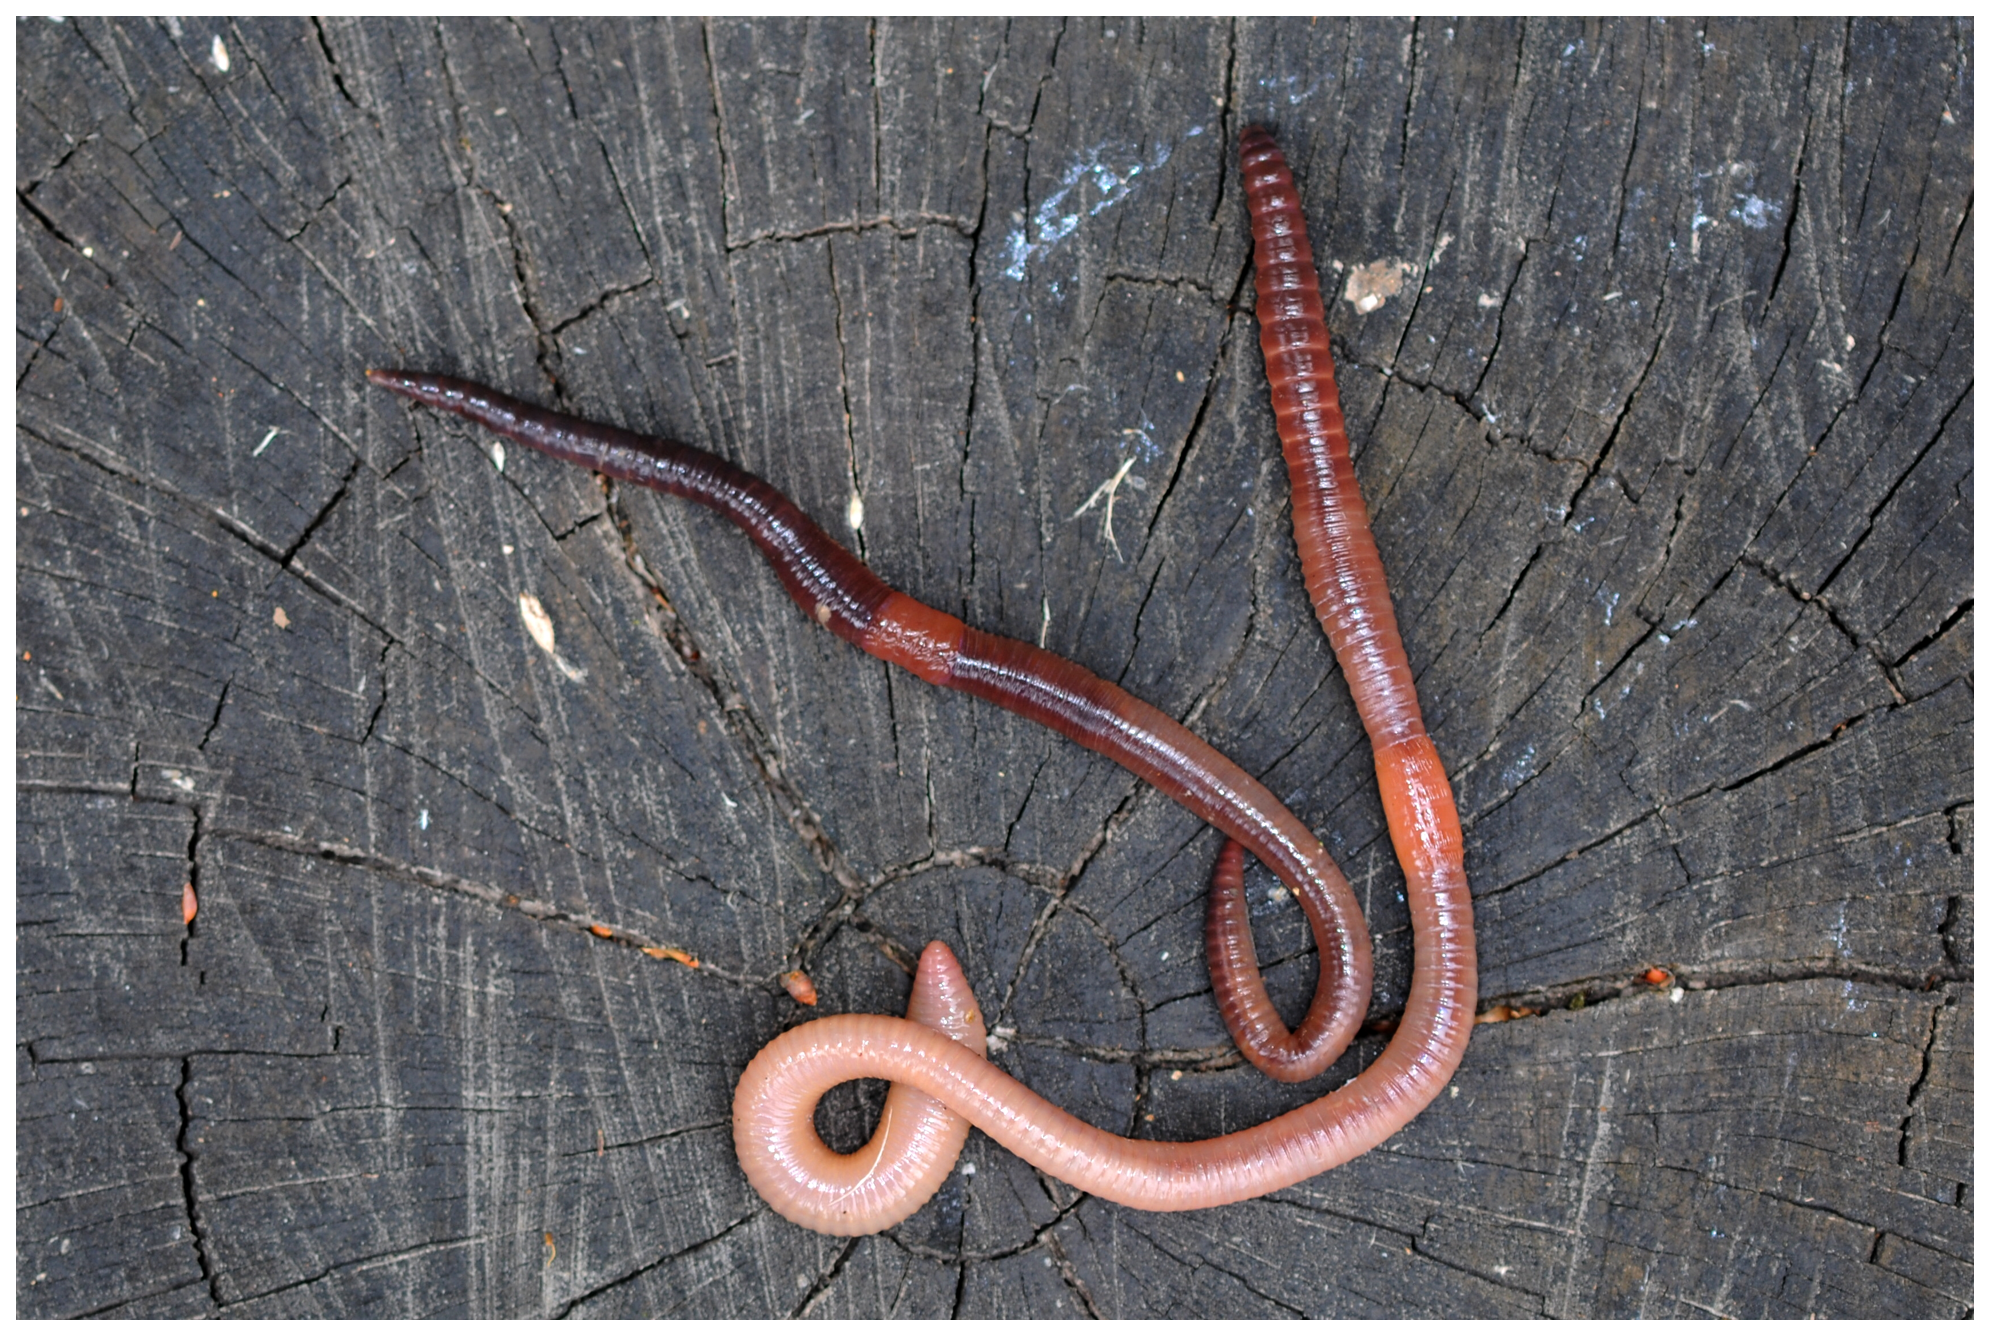 Earthworms under threat